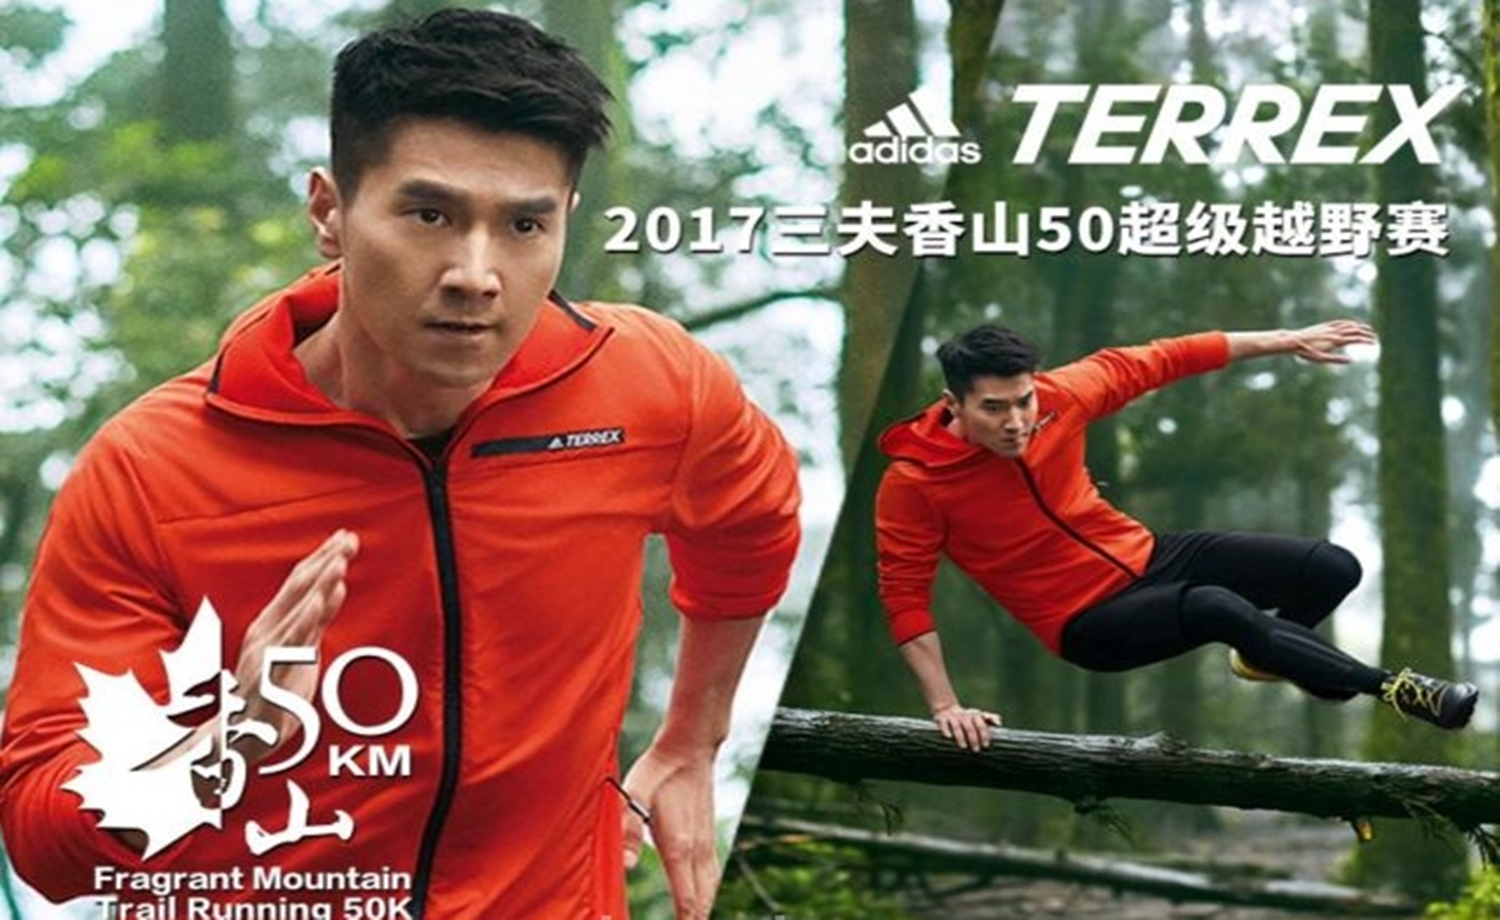 adidas TERREX 2017三夫香山50超级越野赛